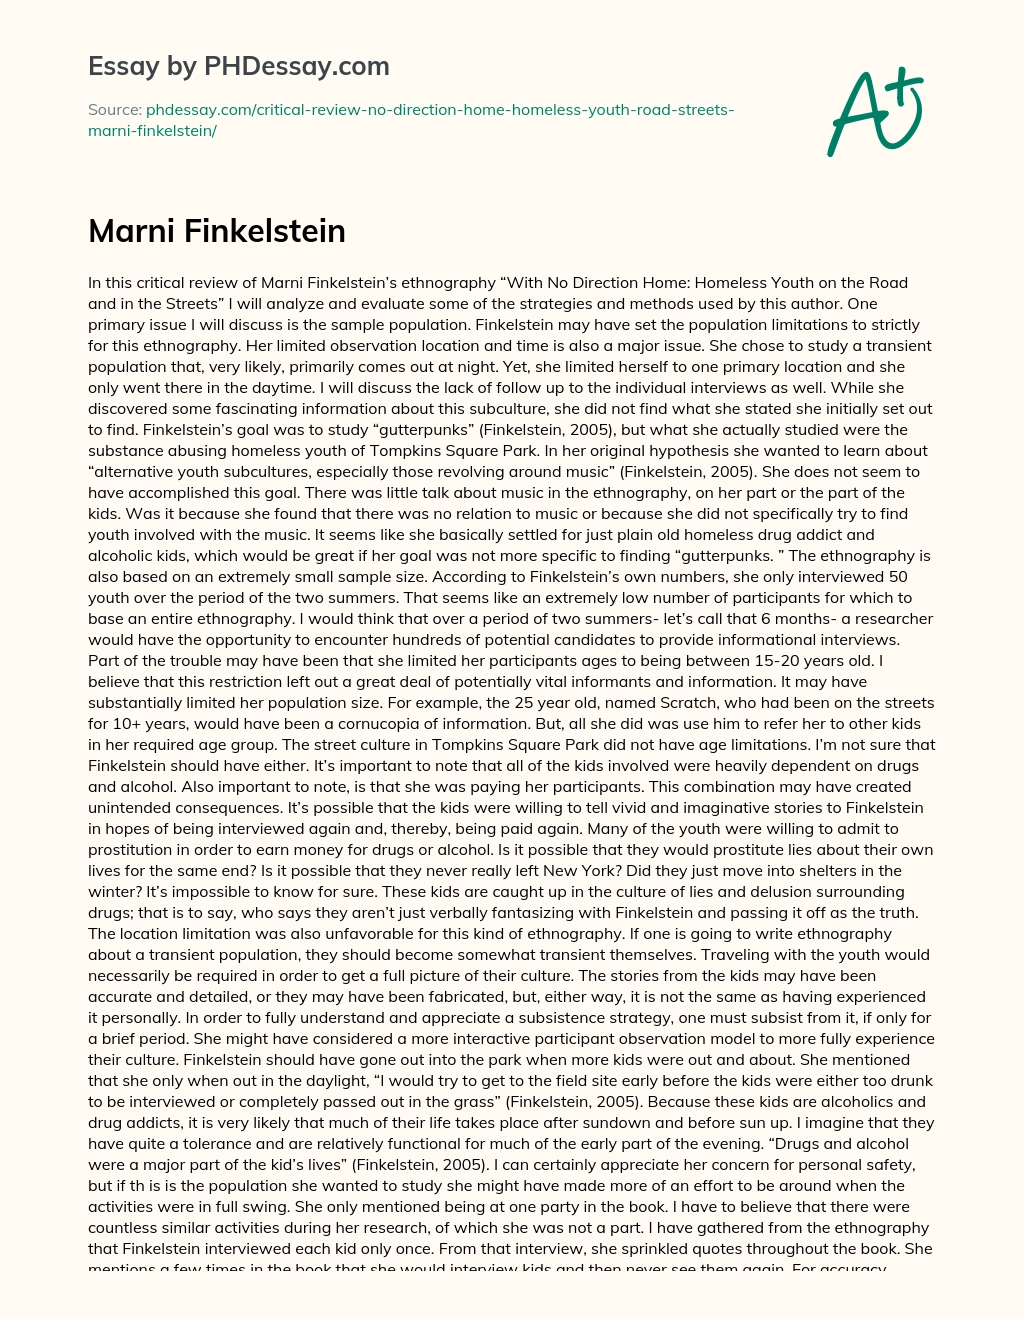 Marni Finkelstein essay